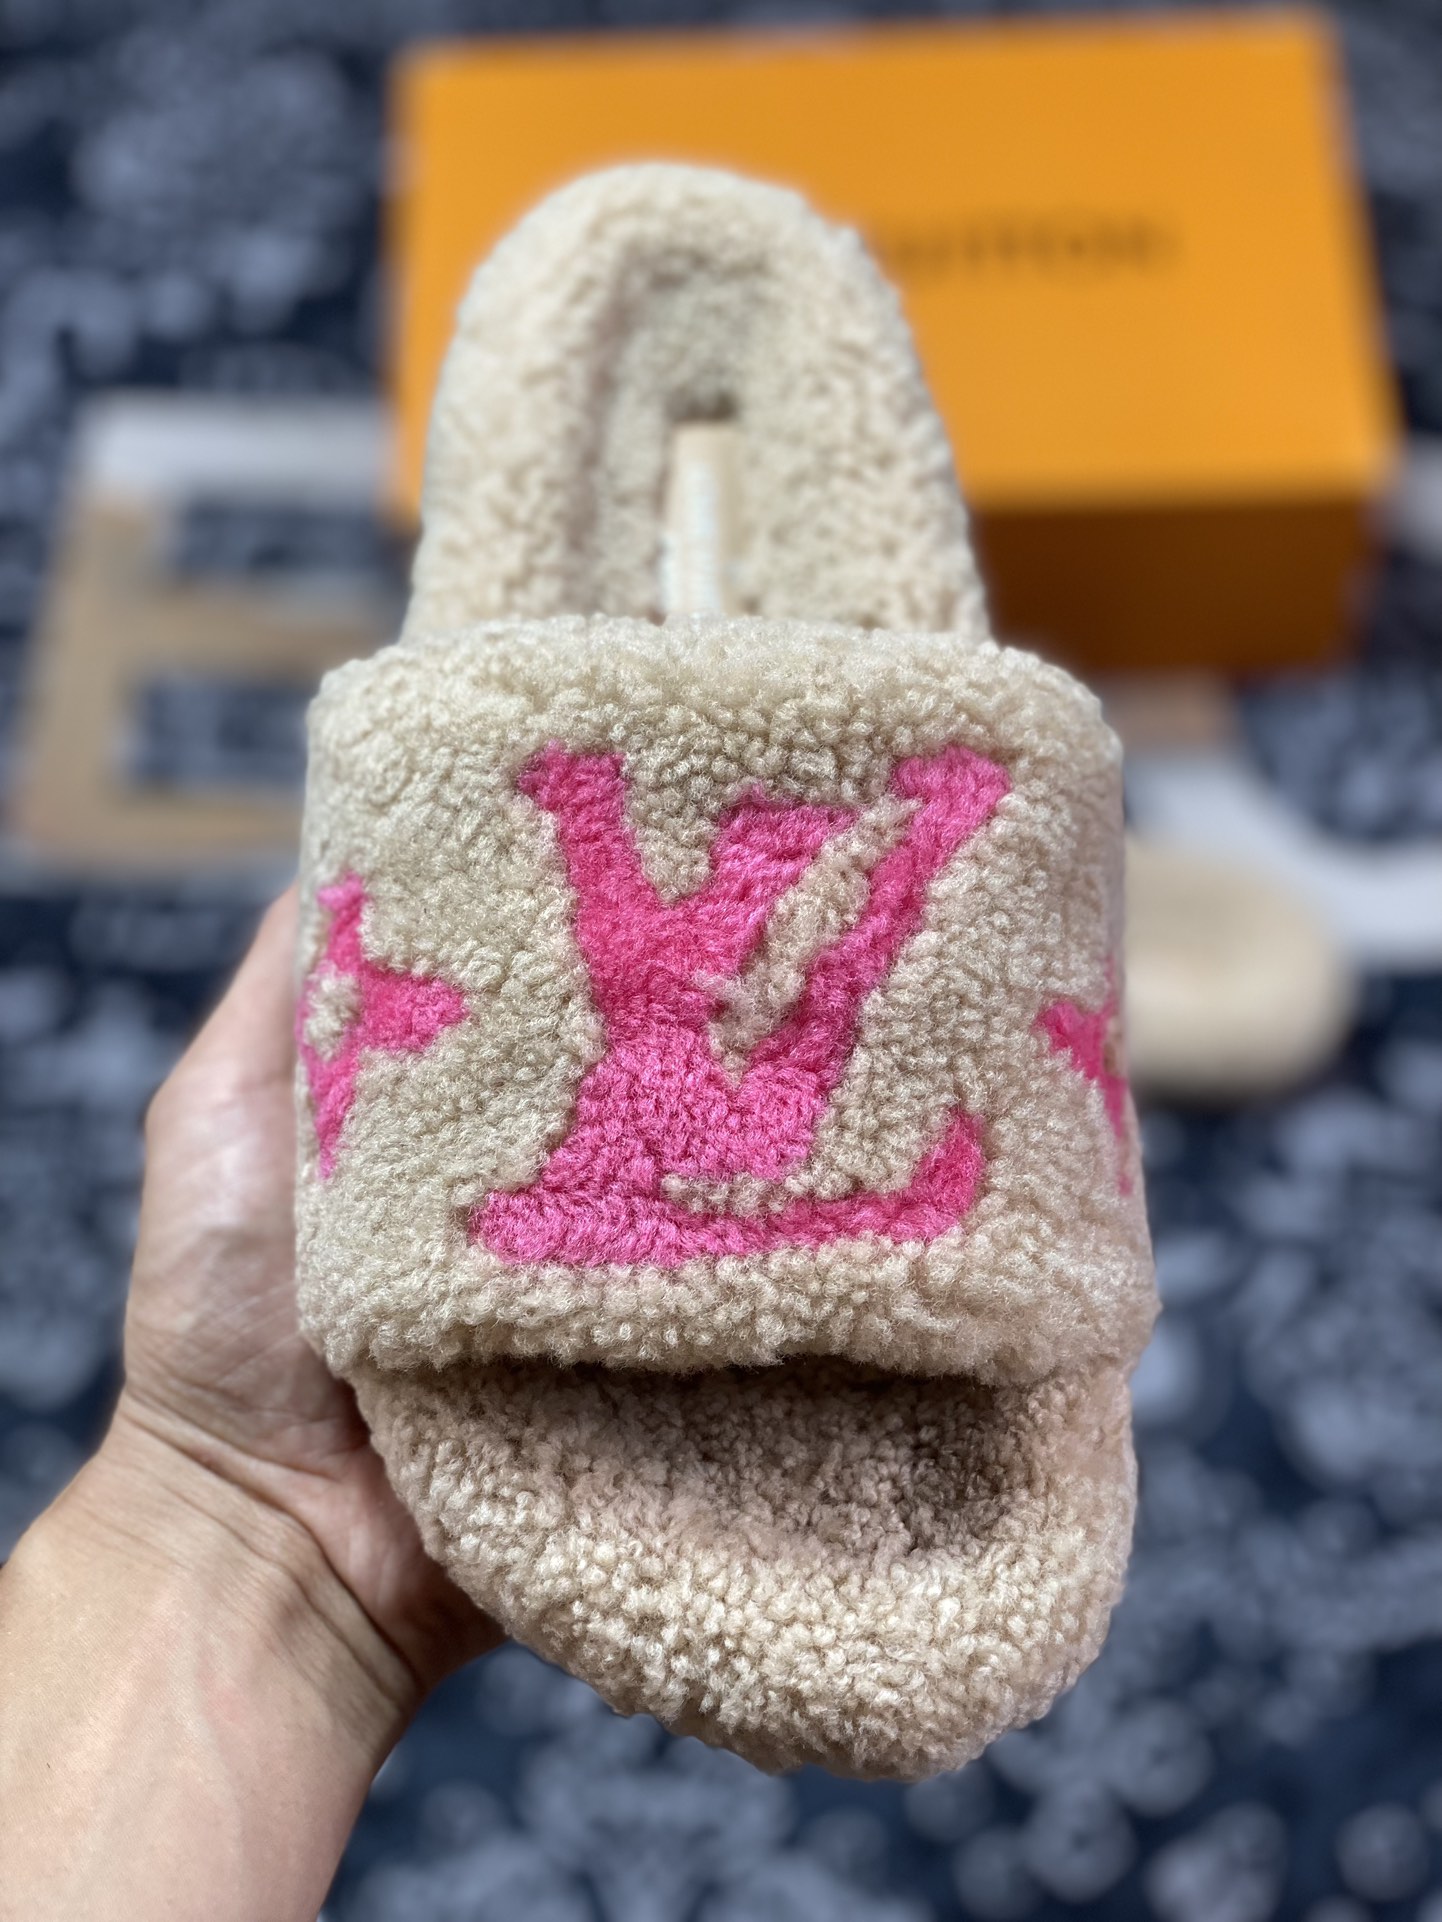 VLouis Vuitton Bom Dia Sandal Bom Dia series plush ladies retro flat open toe winter non-slip slippers 